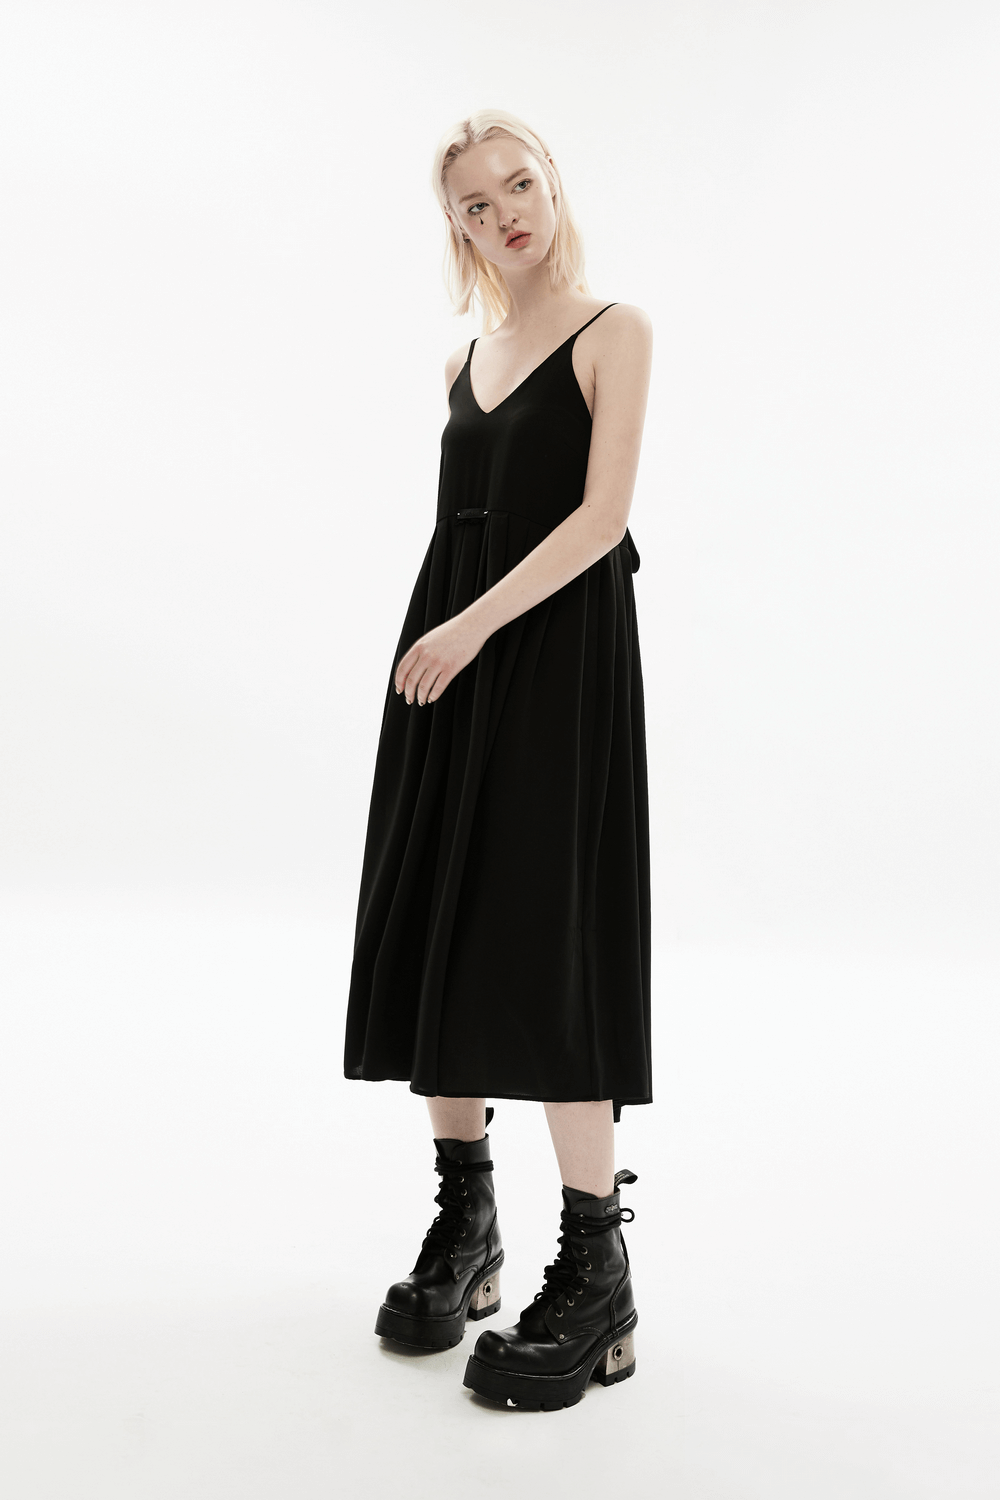 Sleeveless Midi Dress with V-Neck and A-Line Skirt